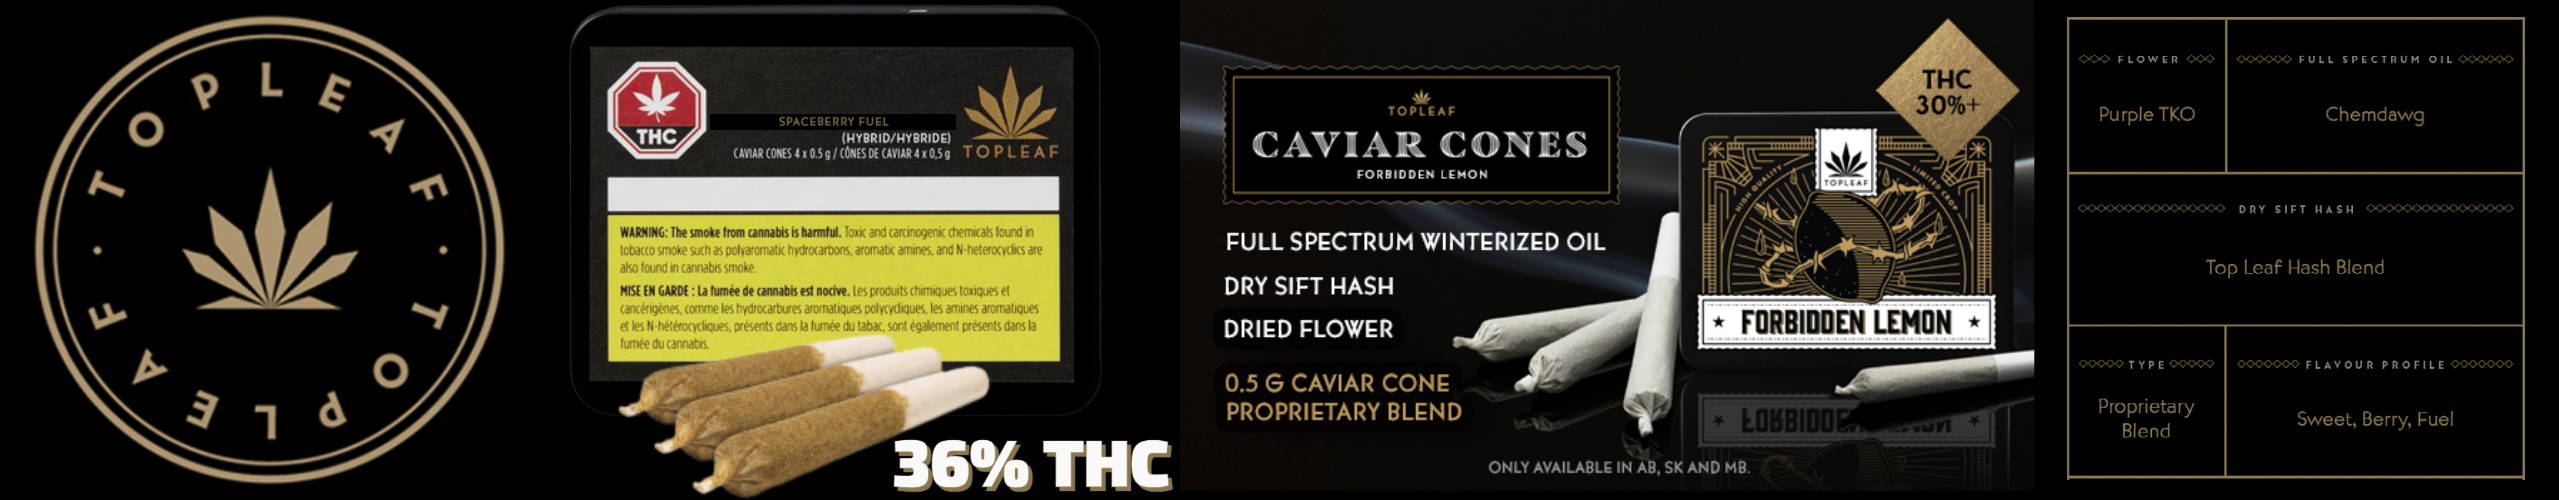 Top Leaf Spaceberry Fuel Caviar Cones | Infused Pre Roll | High THC | Jupiter Cannabis Winnipeg